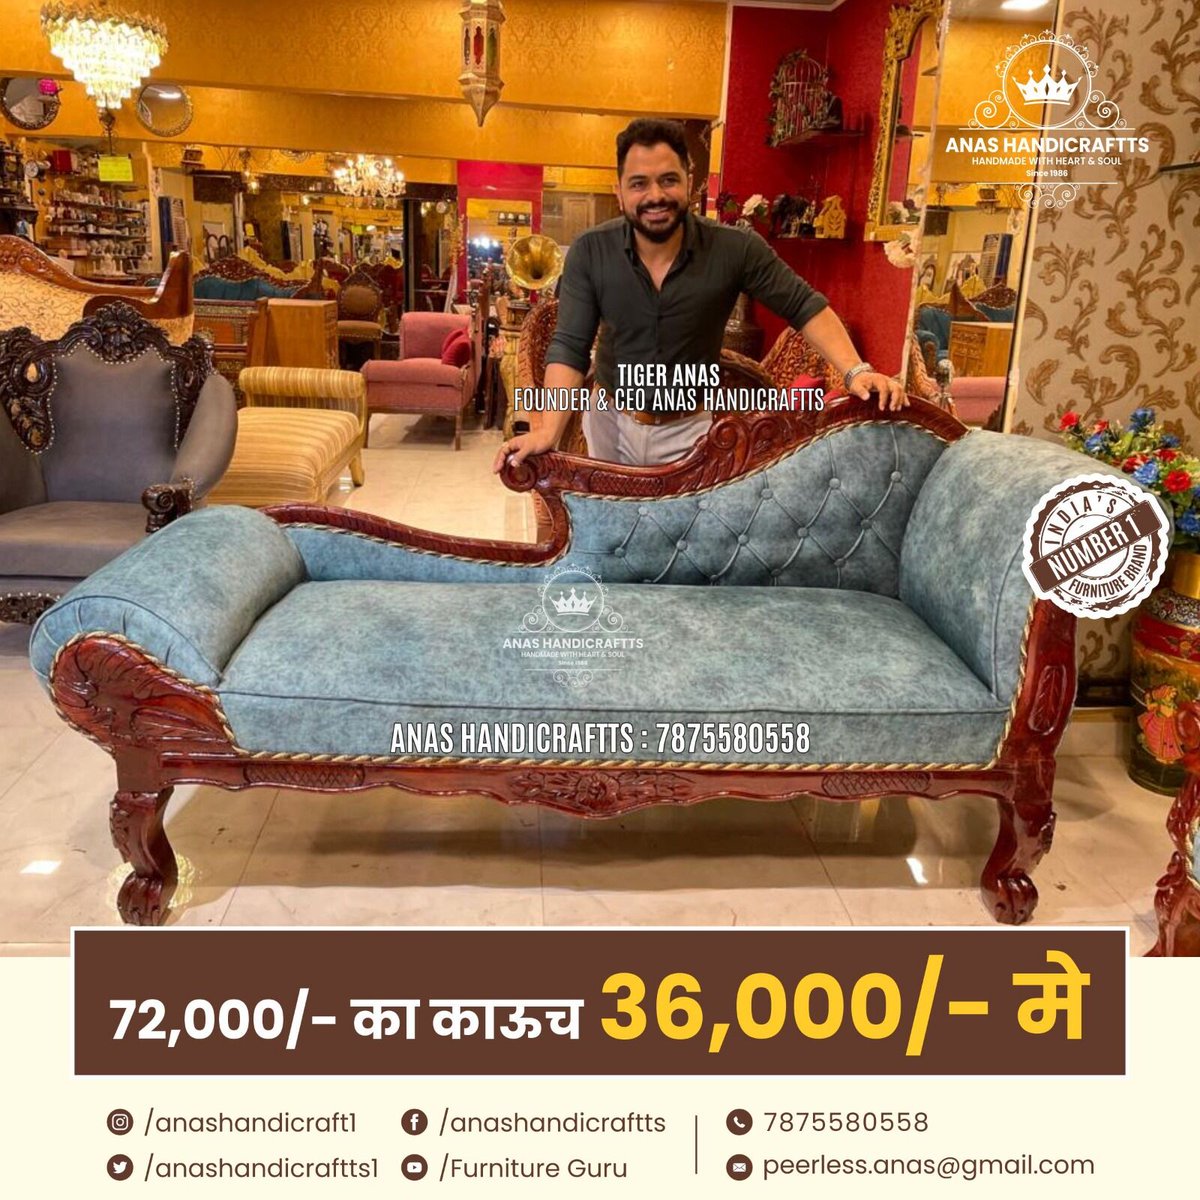 mega sale 🔥 flat 50% off😳

#worldclassfurniture #furnituremaster #bestfurnitureforyou #furnitureshowroom #lovelyfurniture #furnitureforyou #furnituretoday #trendingsofa #indiasnumberone #bestfurnitureinindia #indianbrand #bestinclass